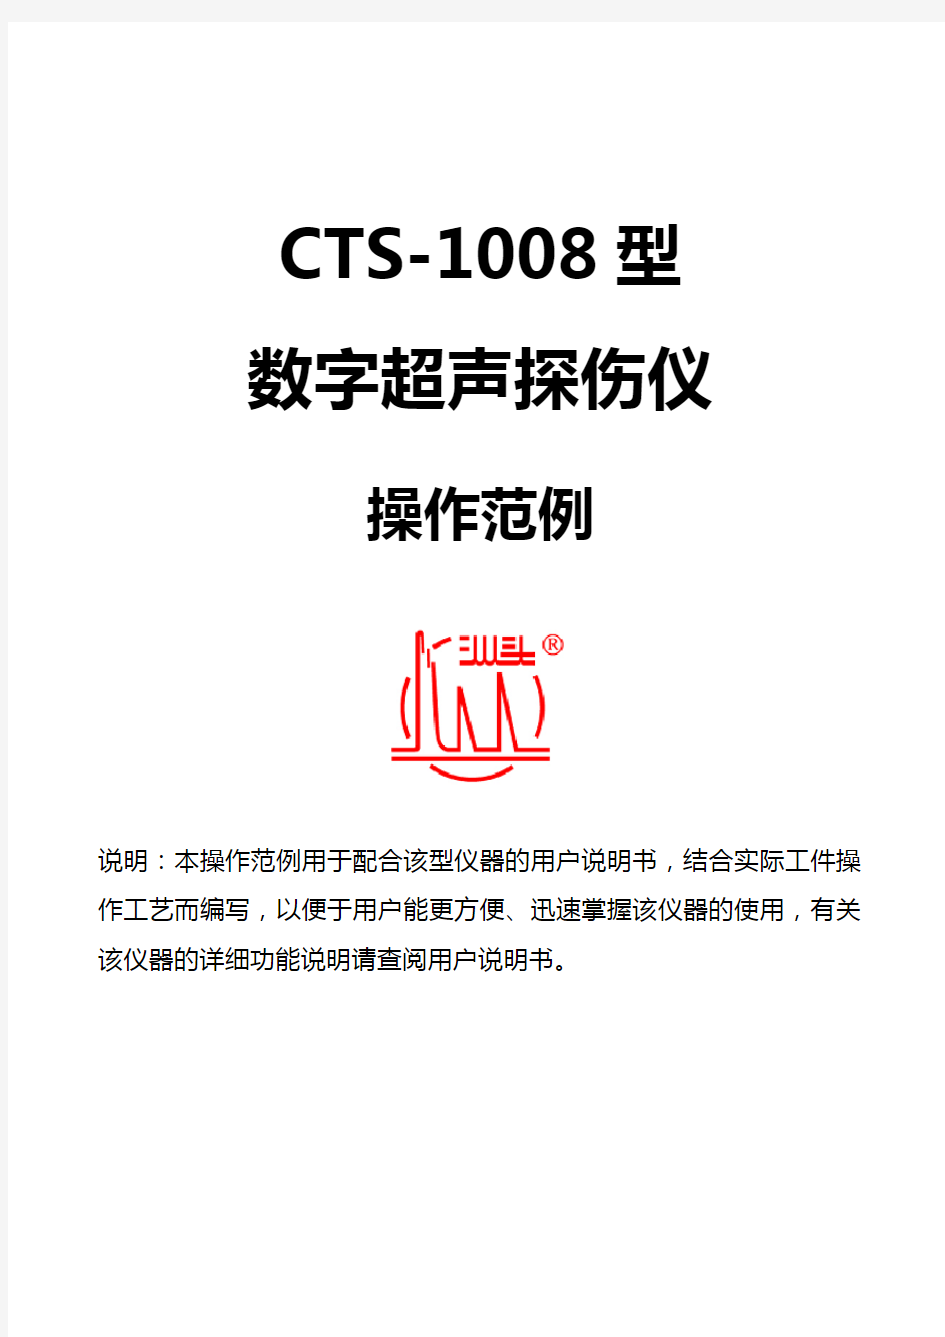 CTS-1008数字超声波探伤仪使用说明(上海如庆)